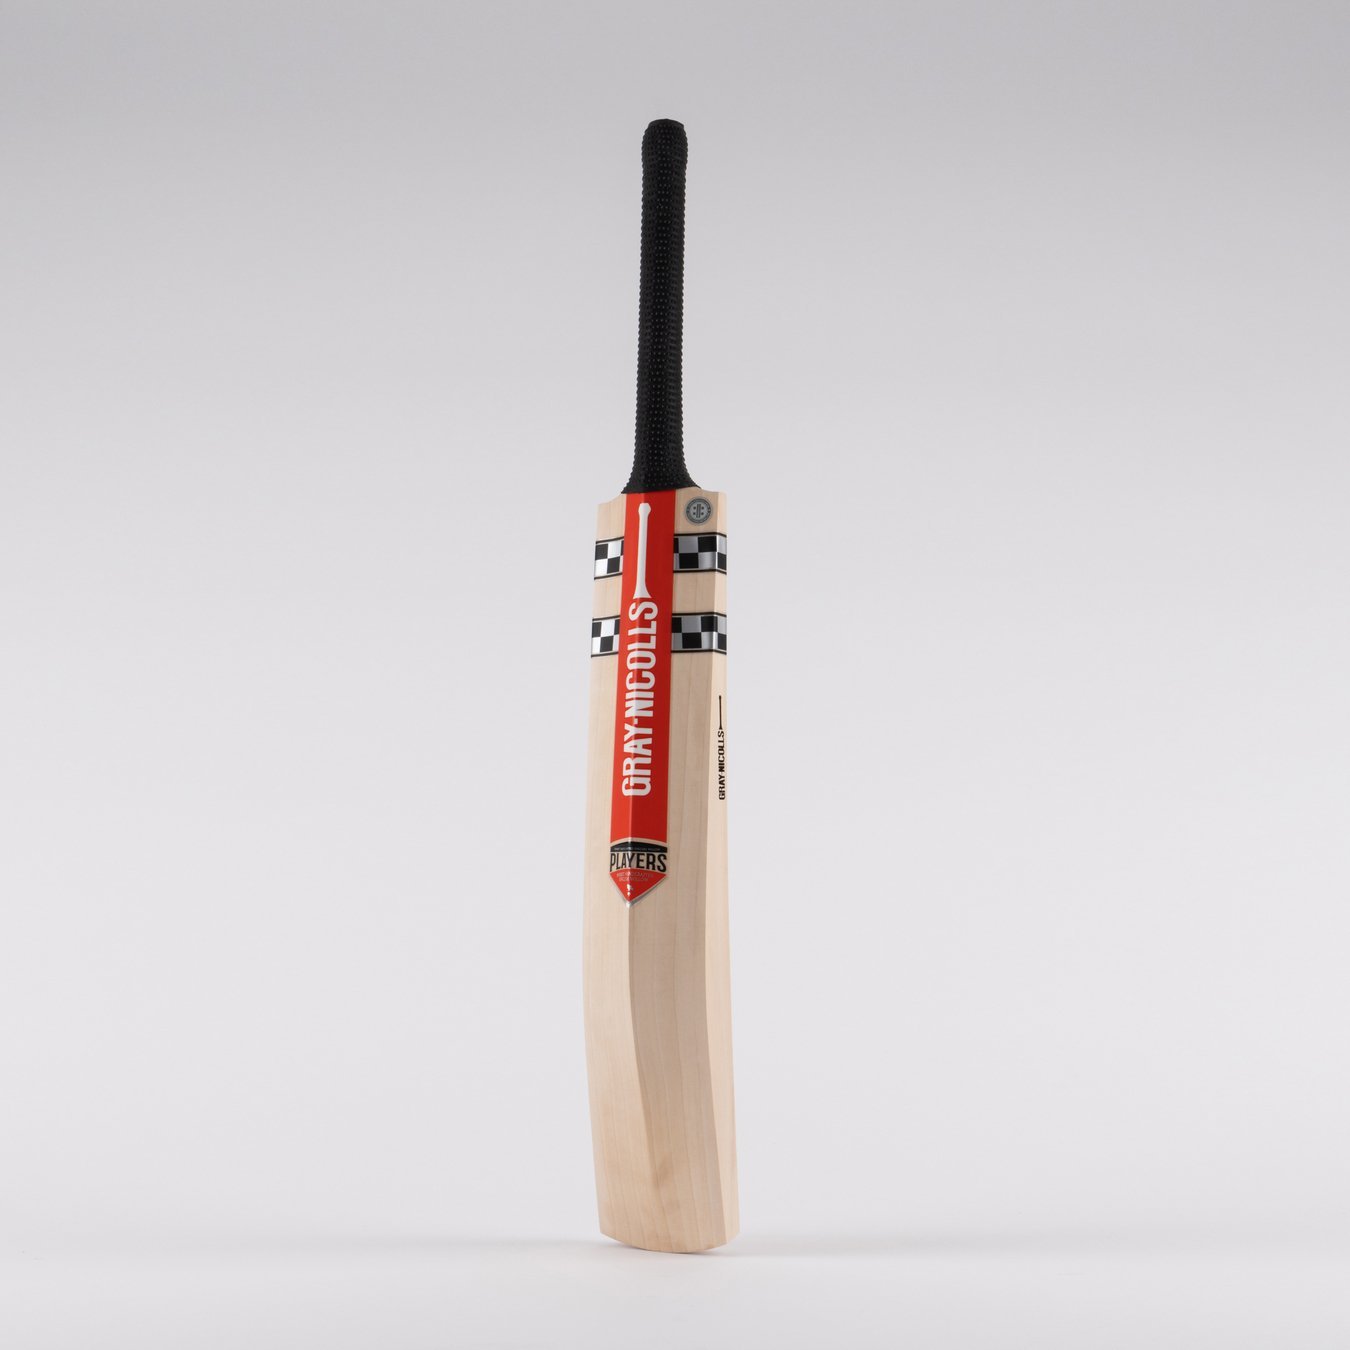 Classic Players Junior Cricket Bat